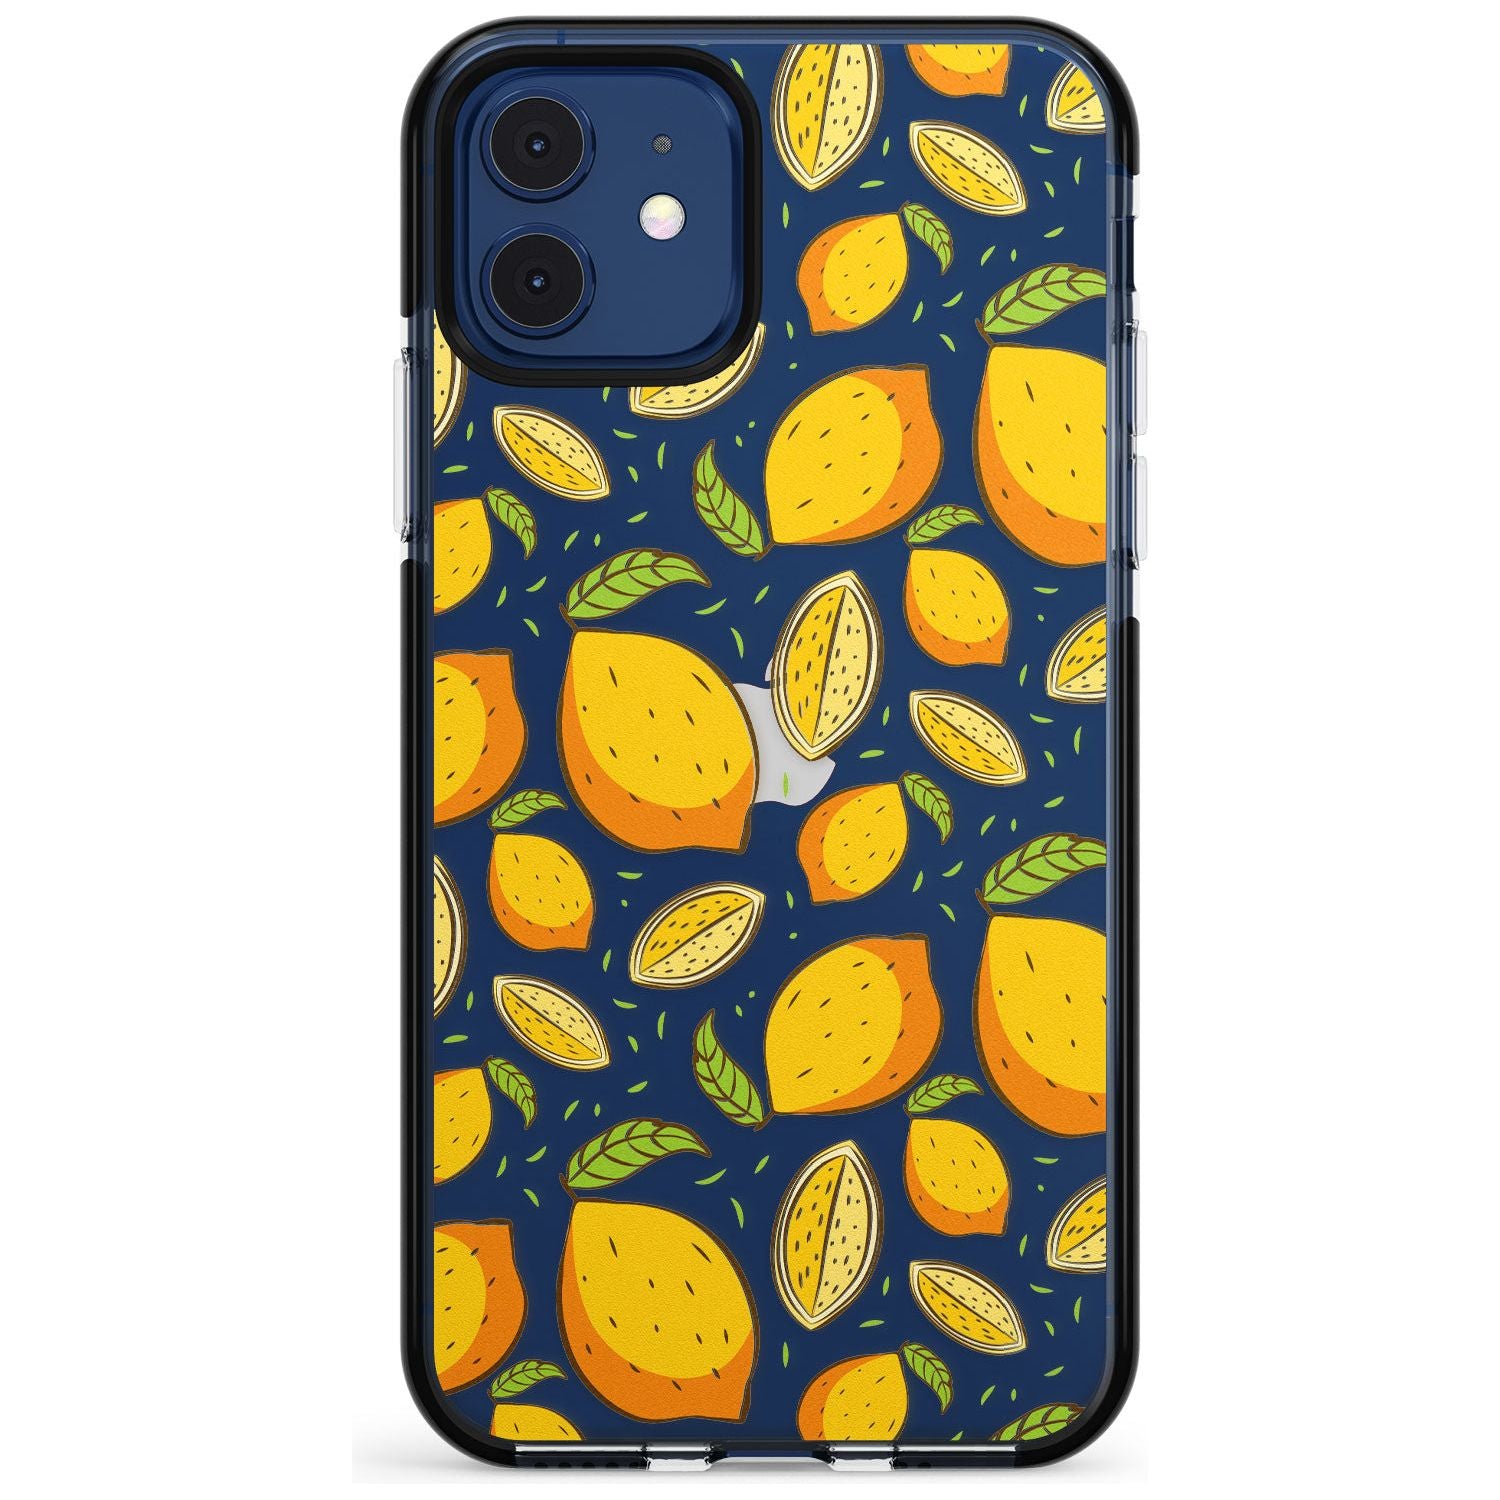 Lemon Pattern Black Impact Phone Case for iPhone 11 Pro Max